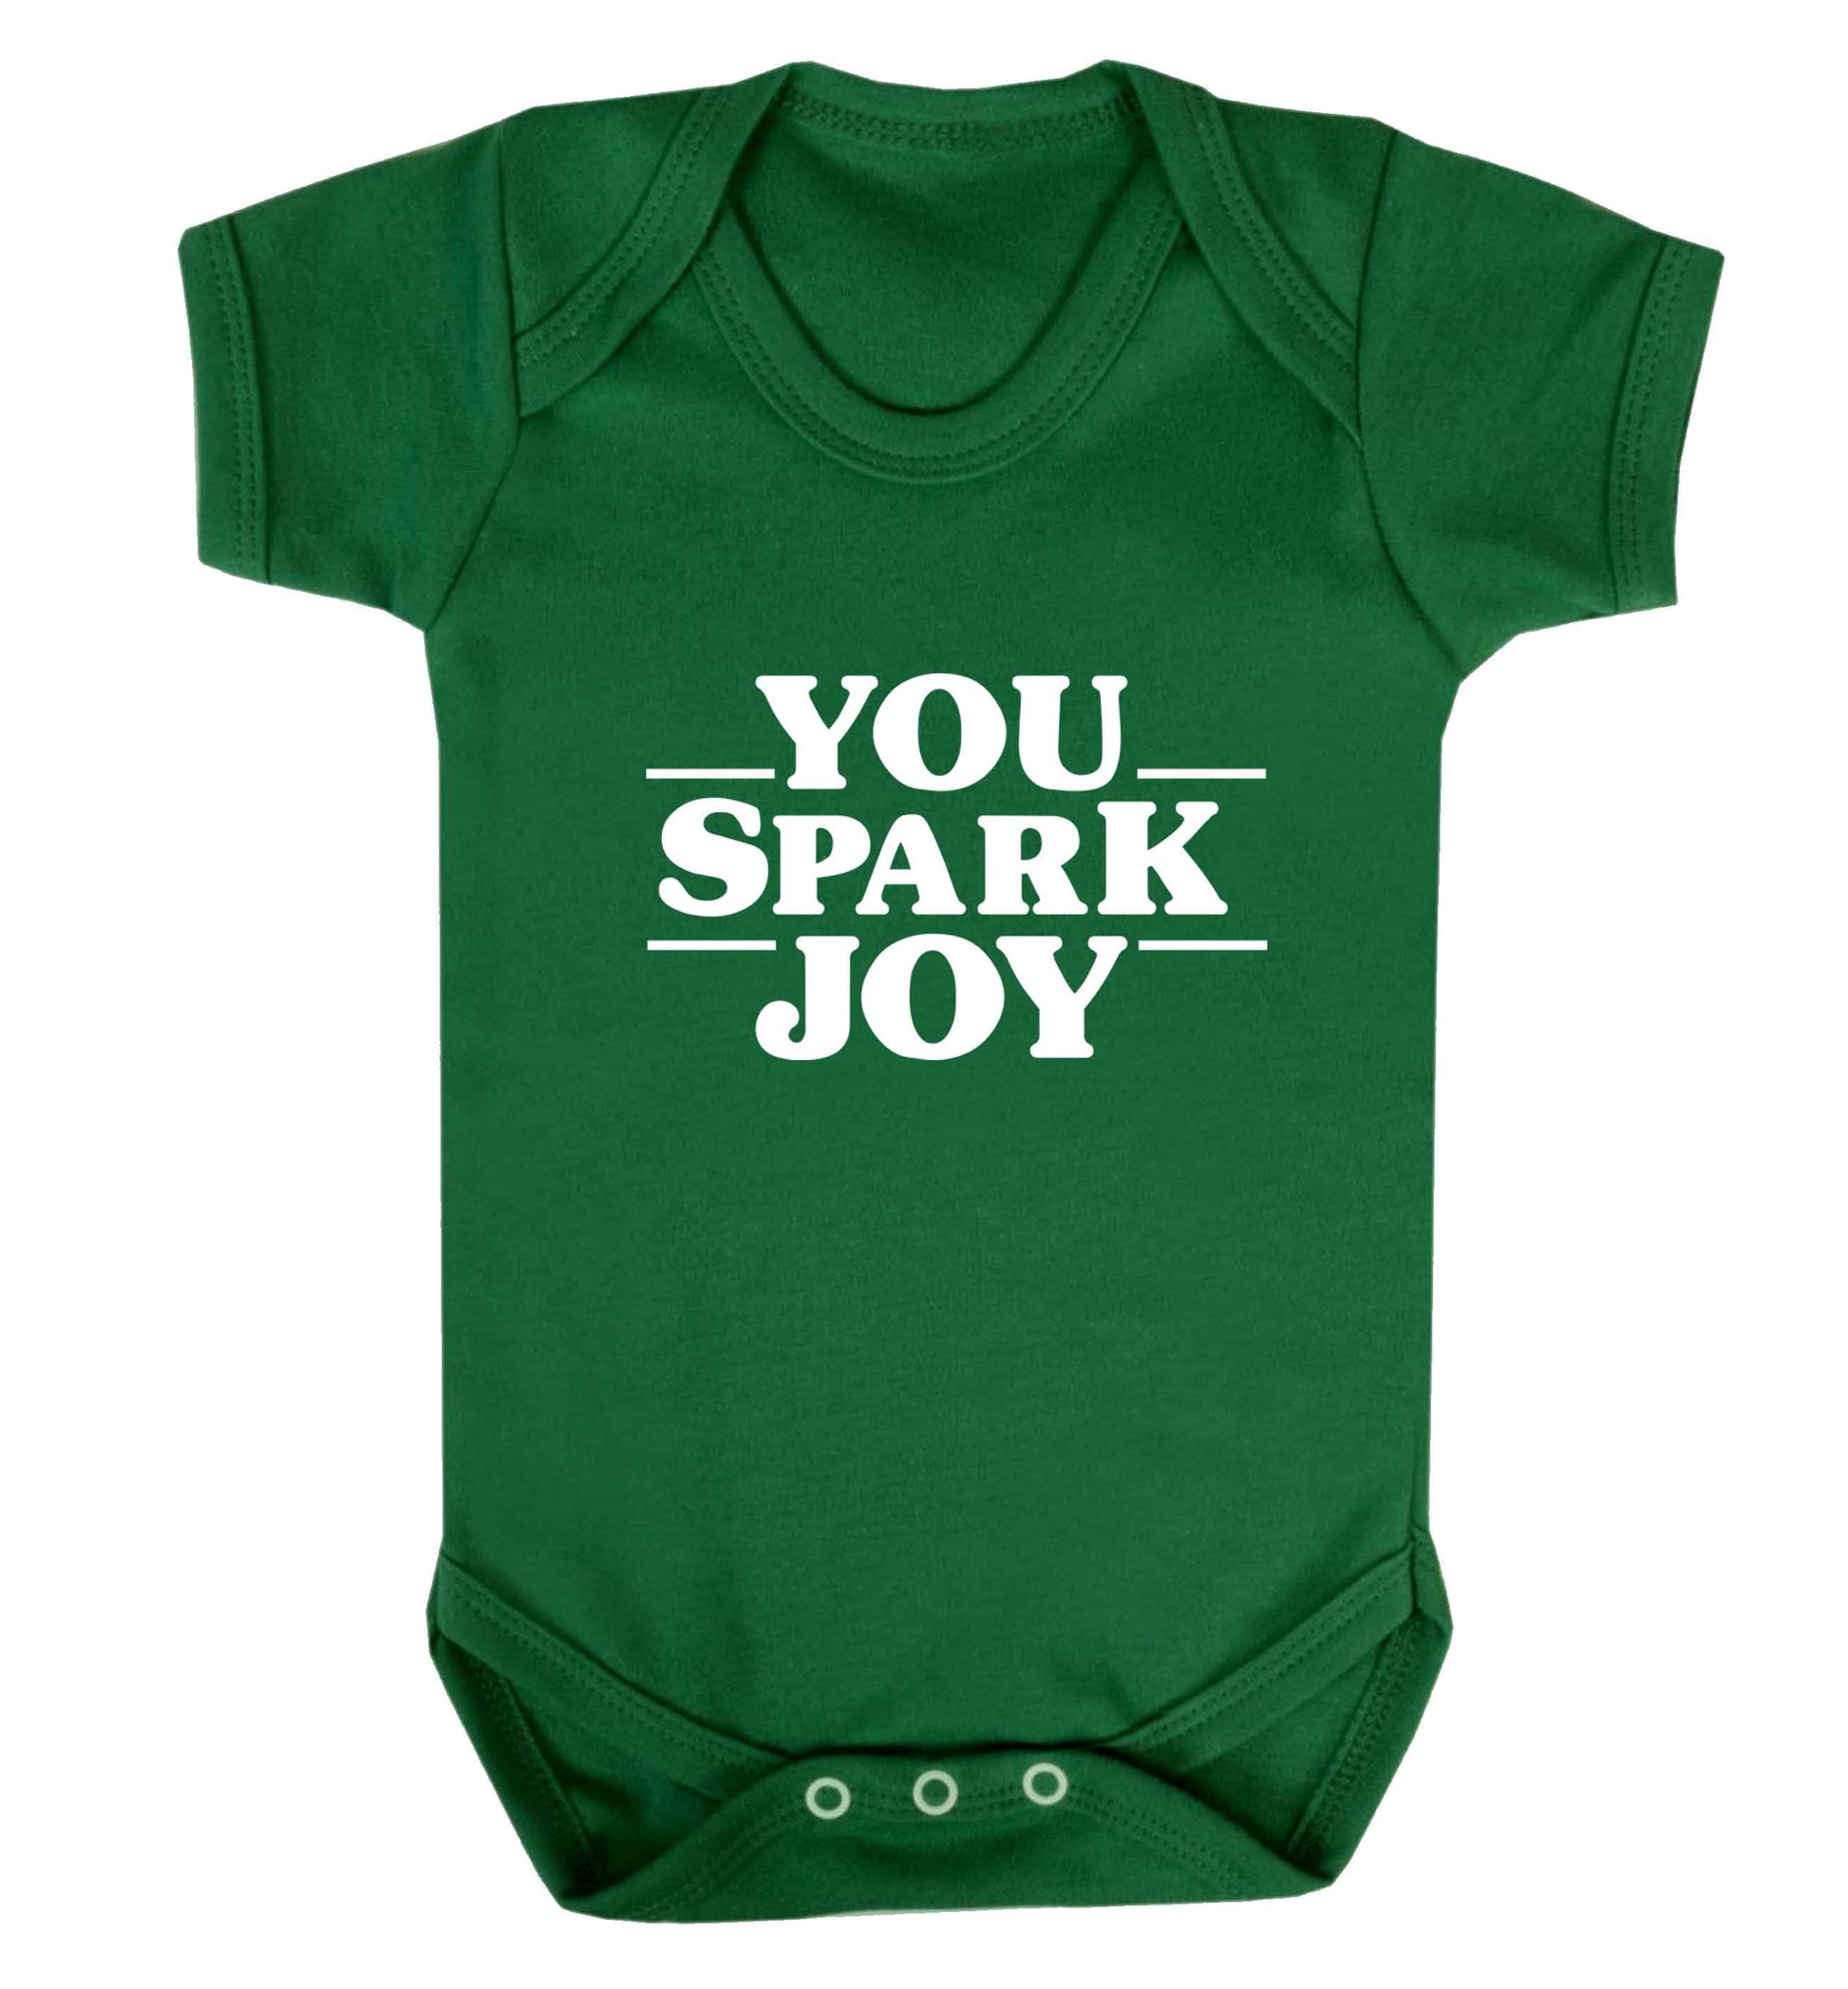 You spark joy baby vest green 18-24 months